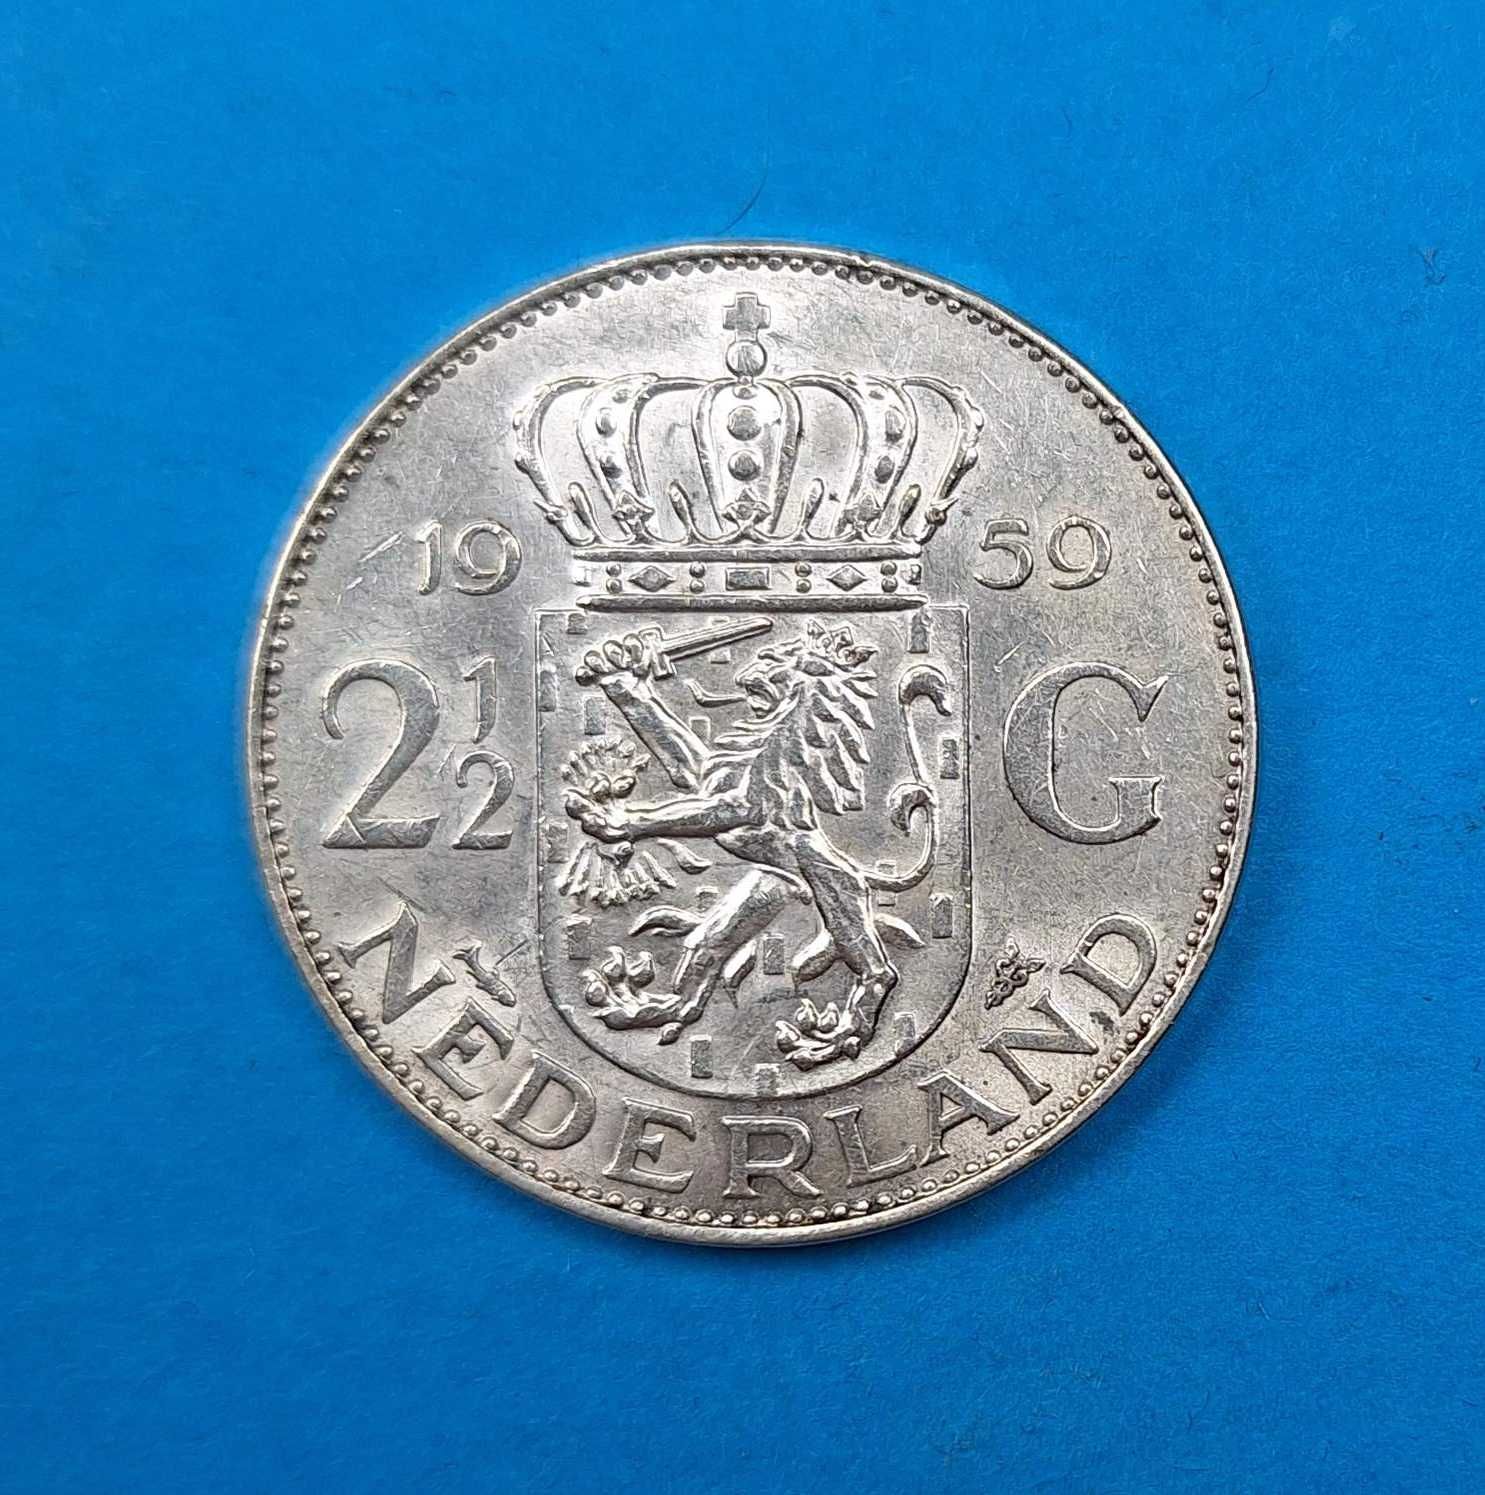 Holandia 2 1/2 guldena 1959, Królowa Juliana, bdb stan, srebro 0,720